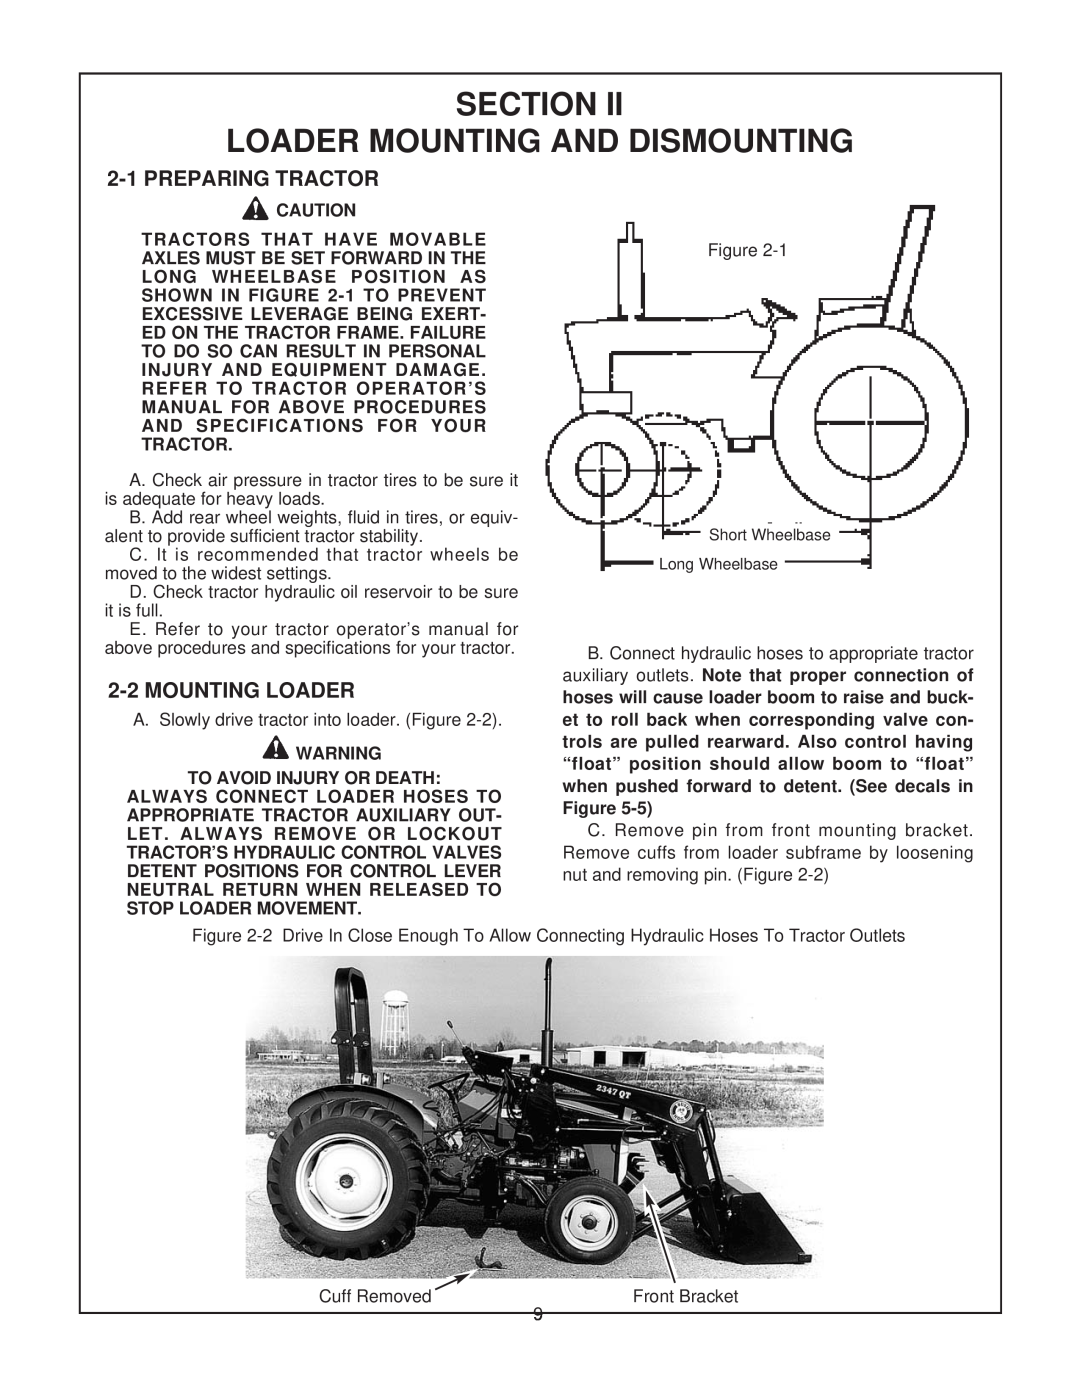 Bush Hog 2347 QT Section Loader Mounting And Dismounting, Preparing Tractor, Mounting Loader, To Avoid Injury Or Death 